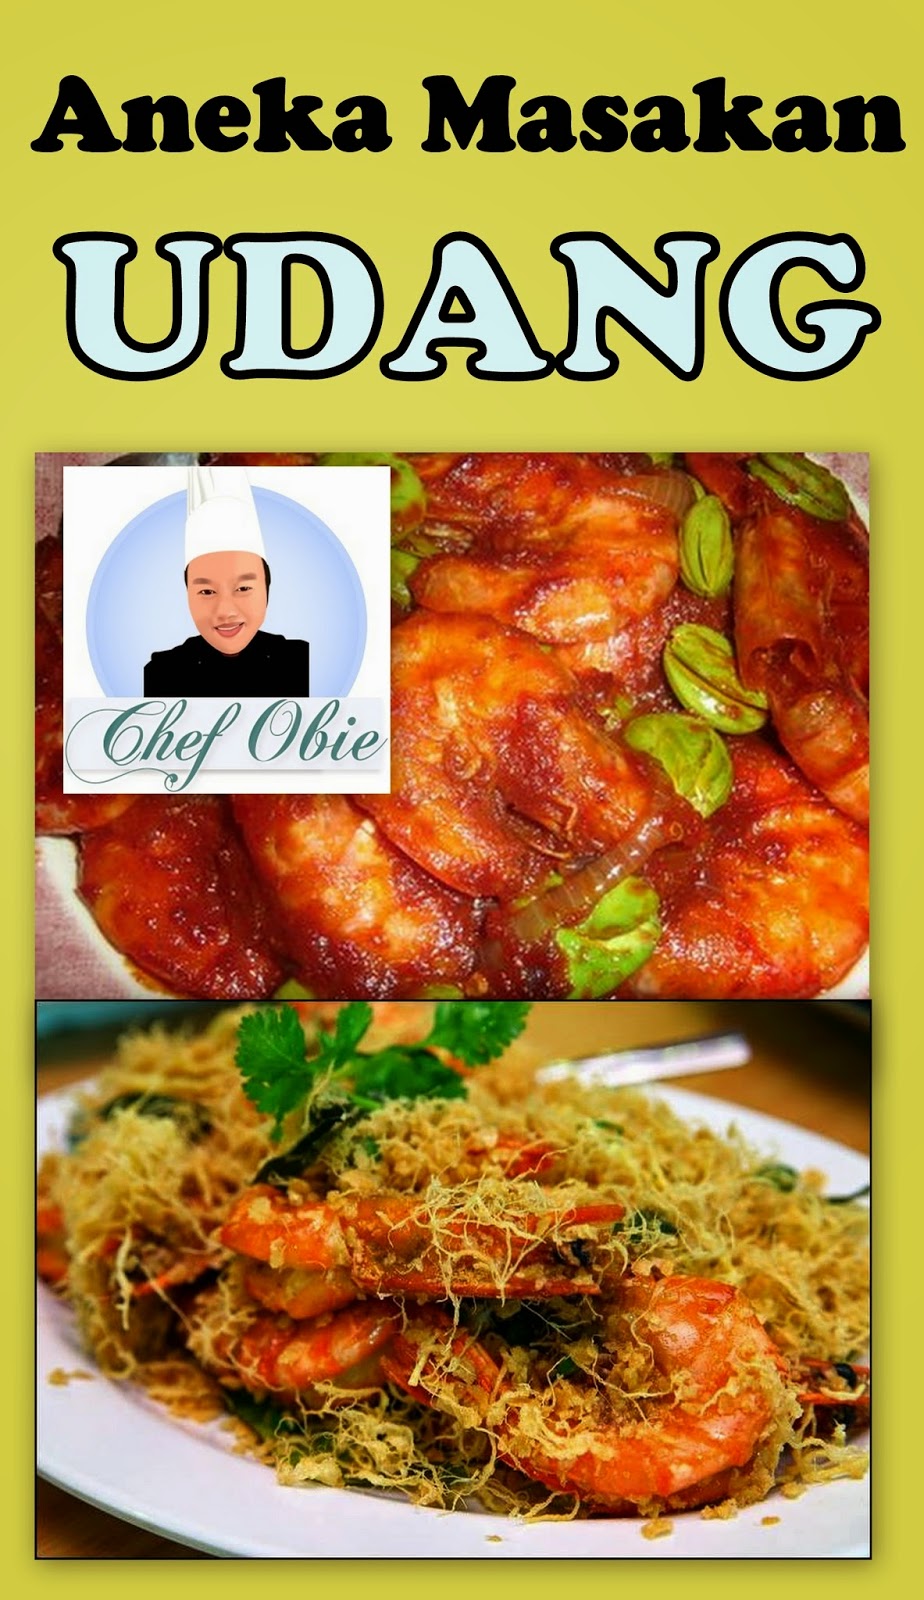 Chef obie 1001 info dan resepi popular: Resepi Aneka 